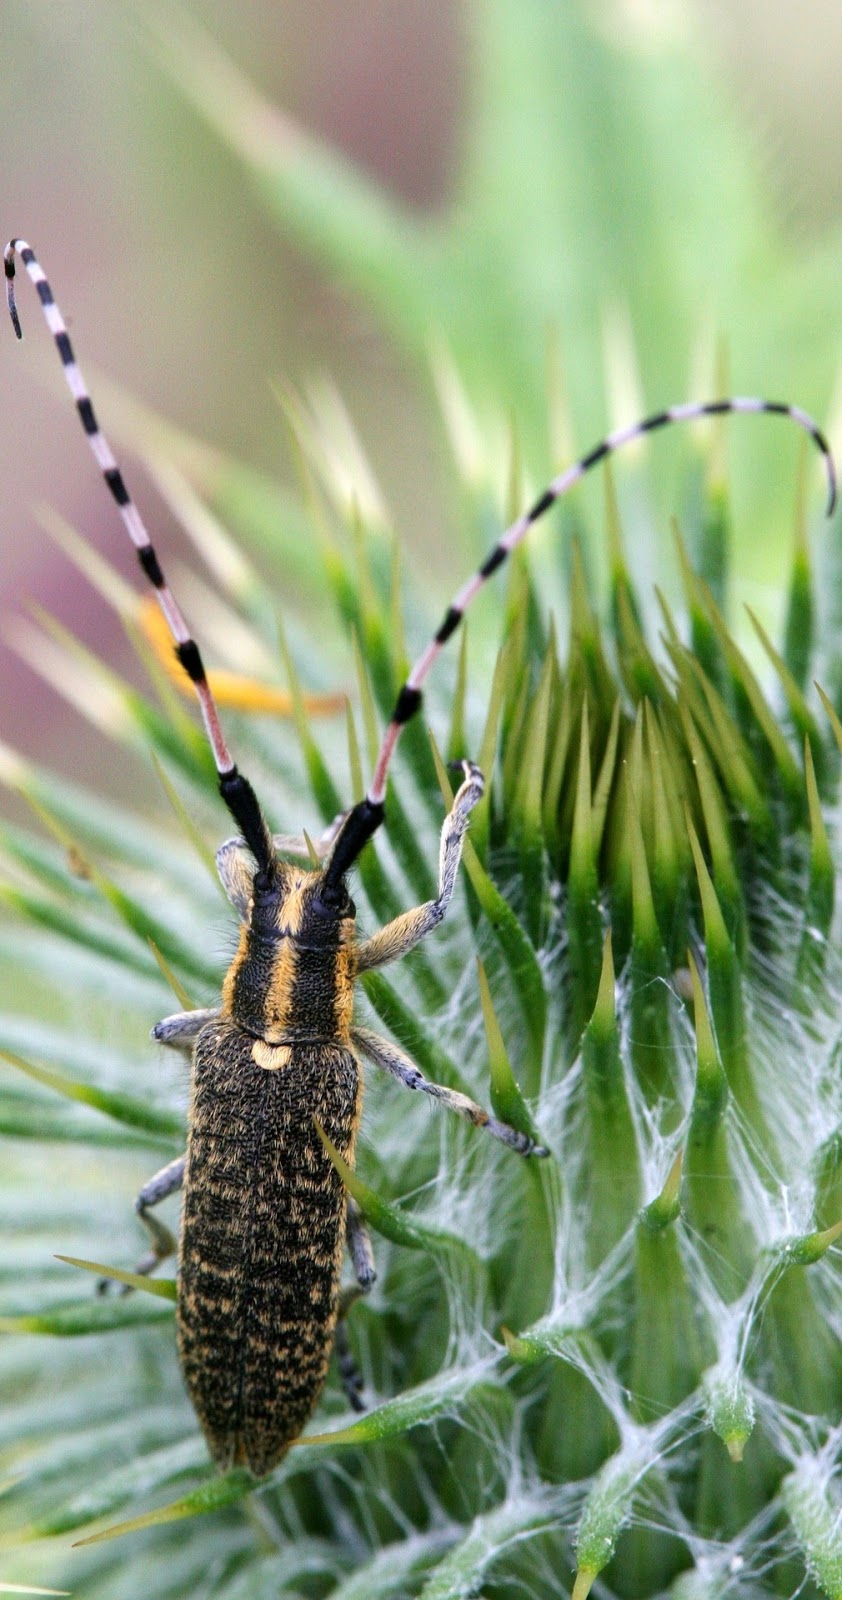 Longhorn beetle navigating a thorny plant.